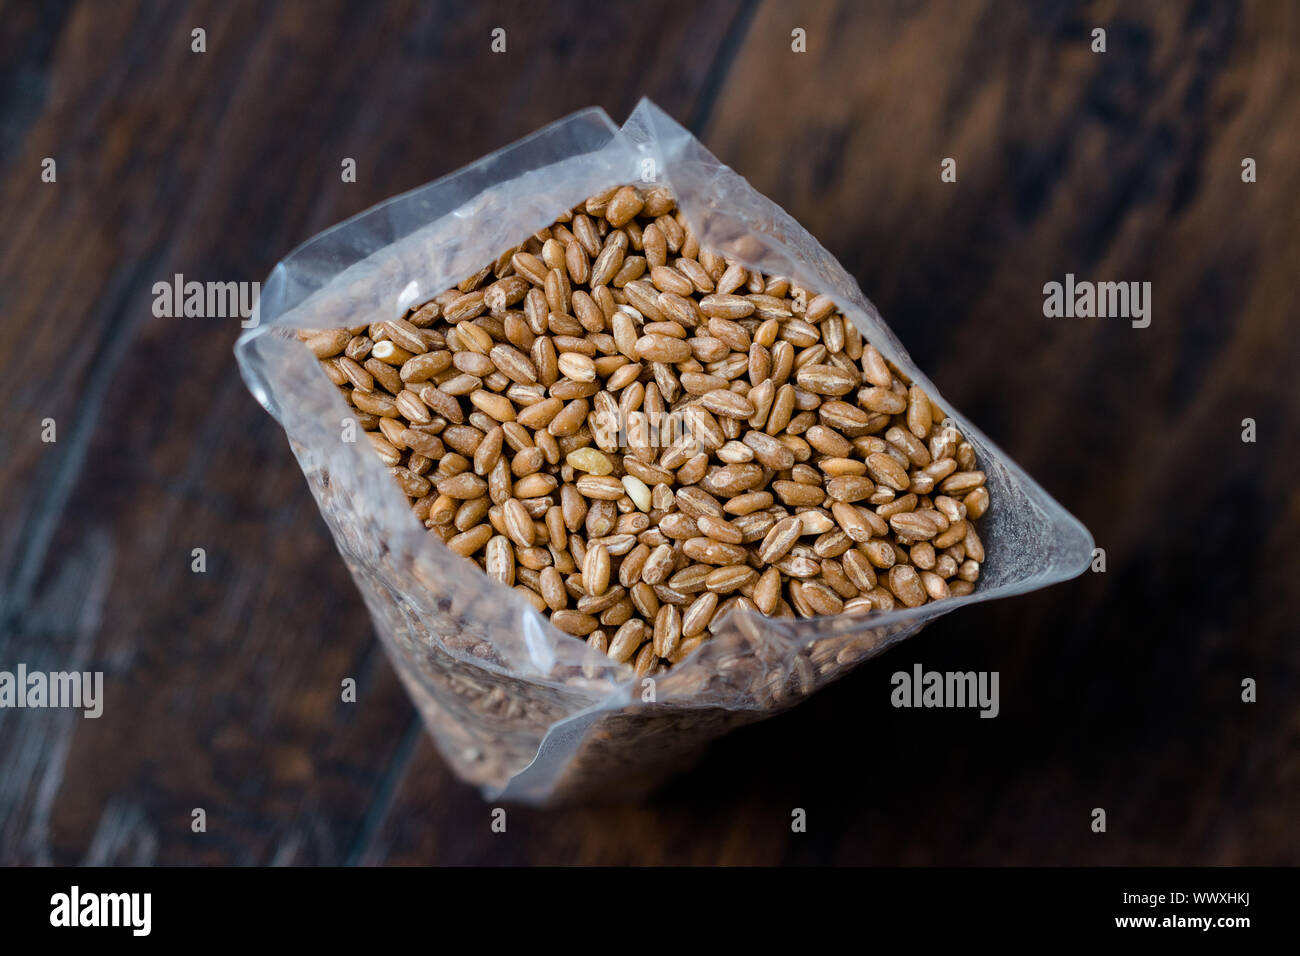 Karakilcik Organic Wheat Grain Seeds in Plastic Package / Container. Traditional Food. Stock Photo